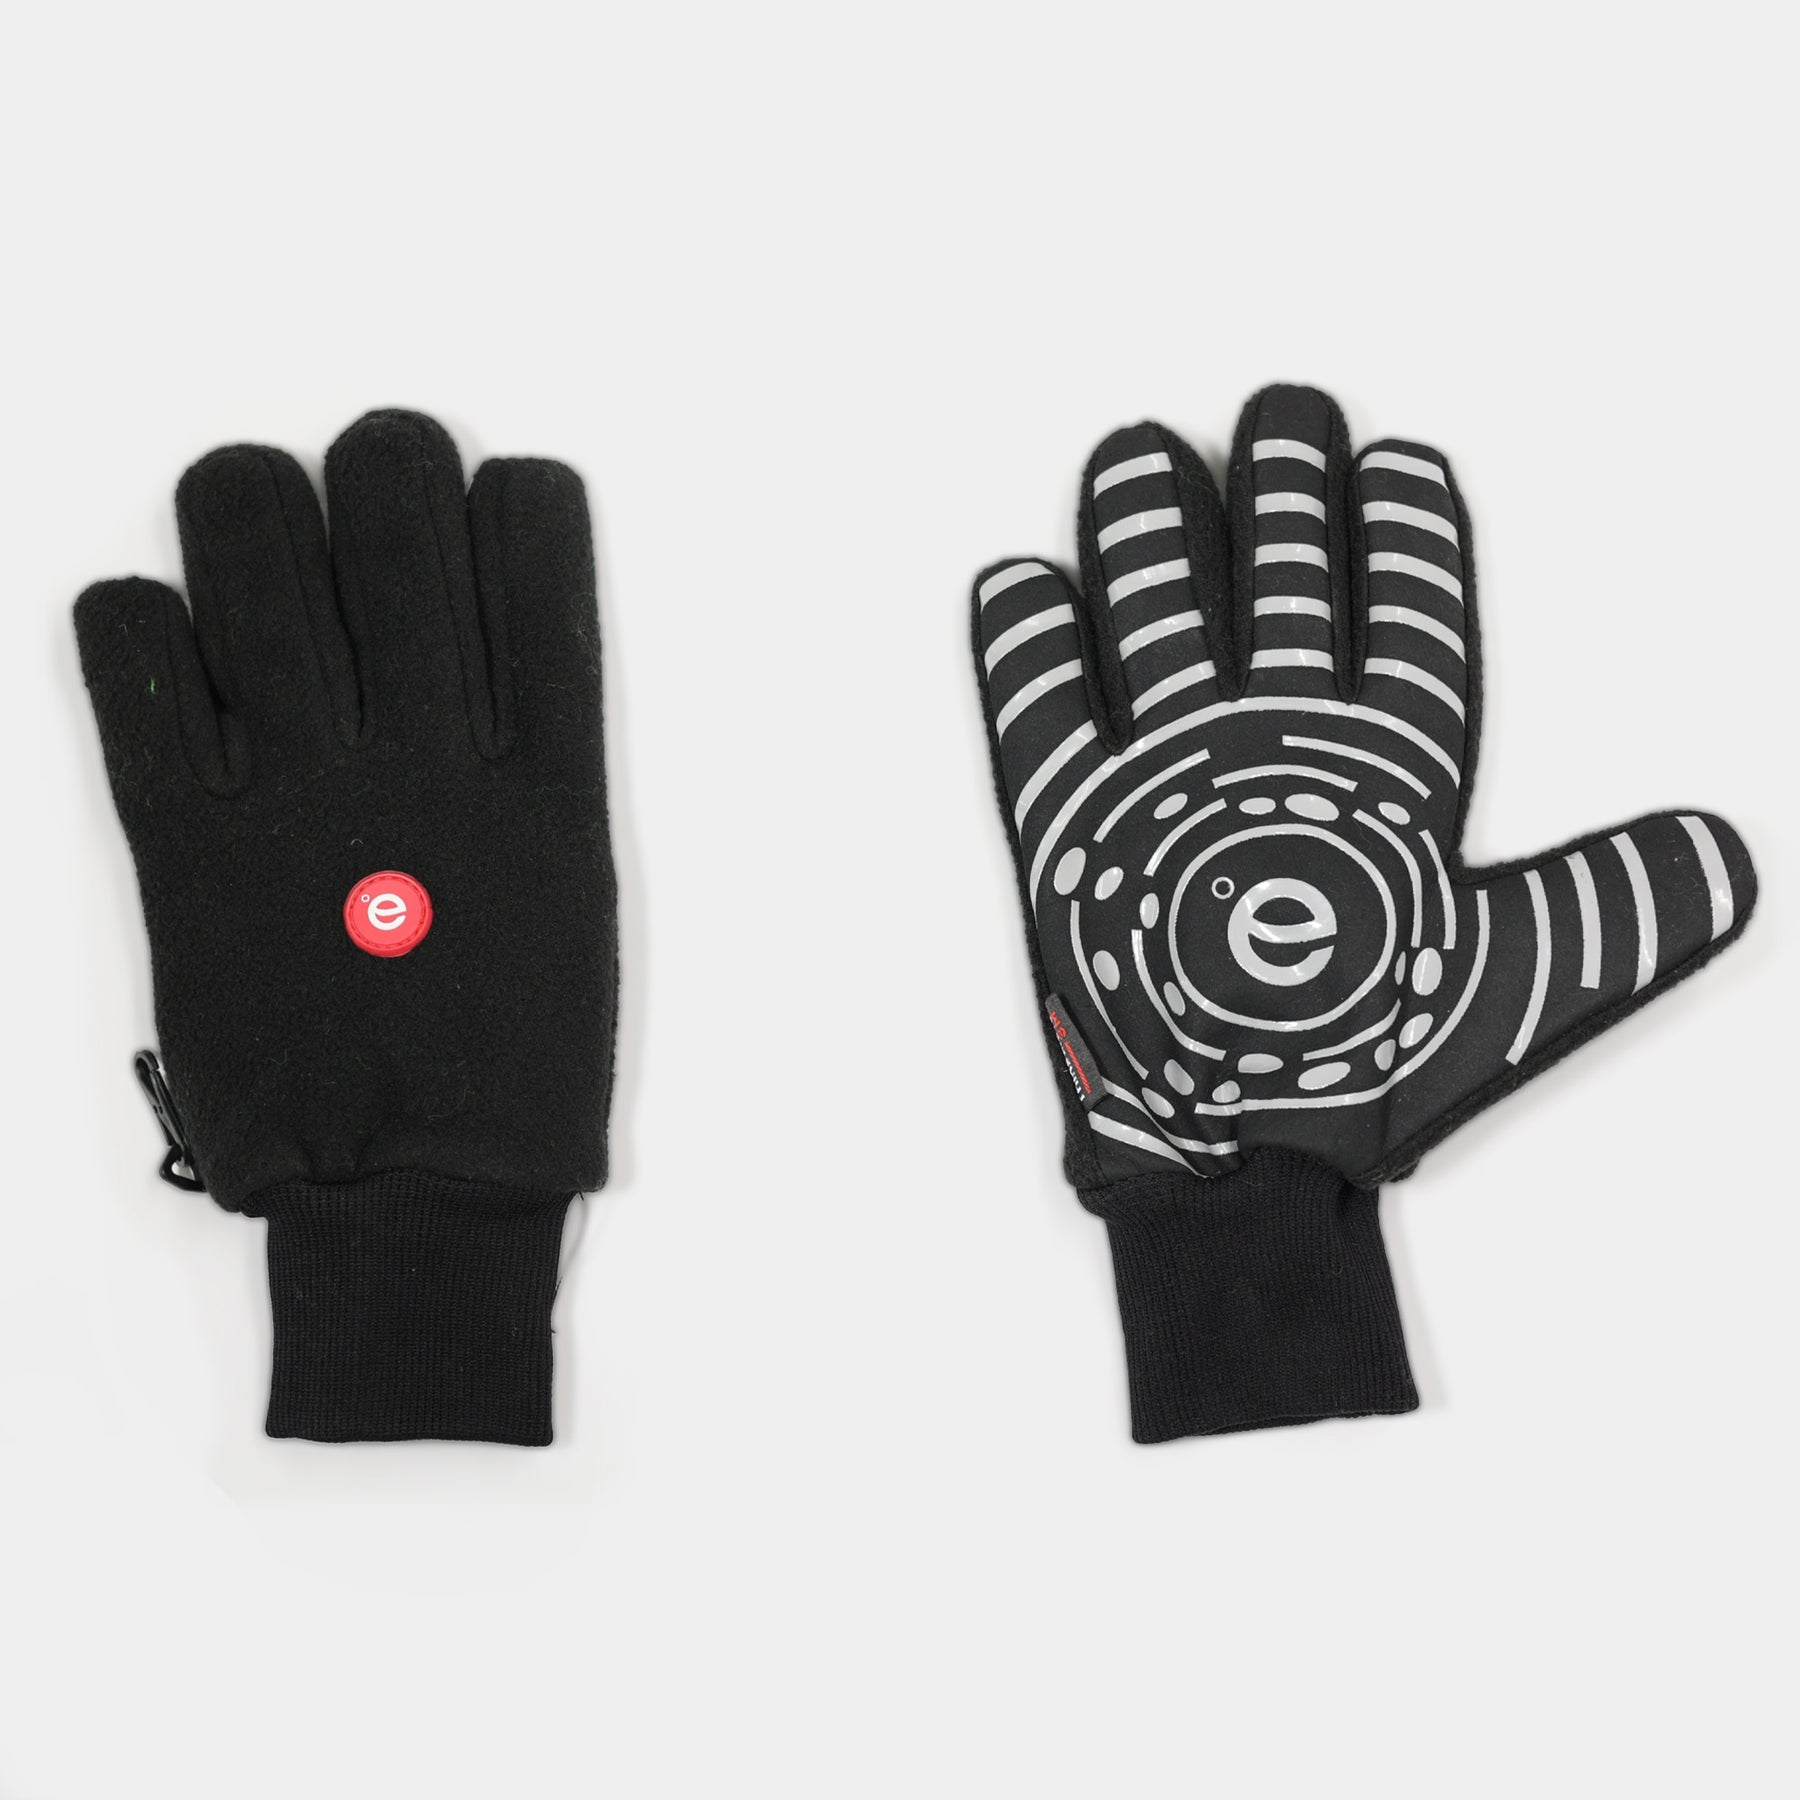 Epik Dual Grip Glove - Black All-Purpose Thermal Glove SM